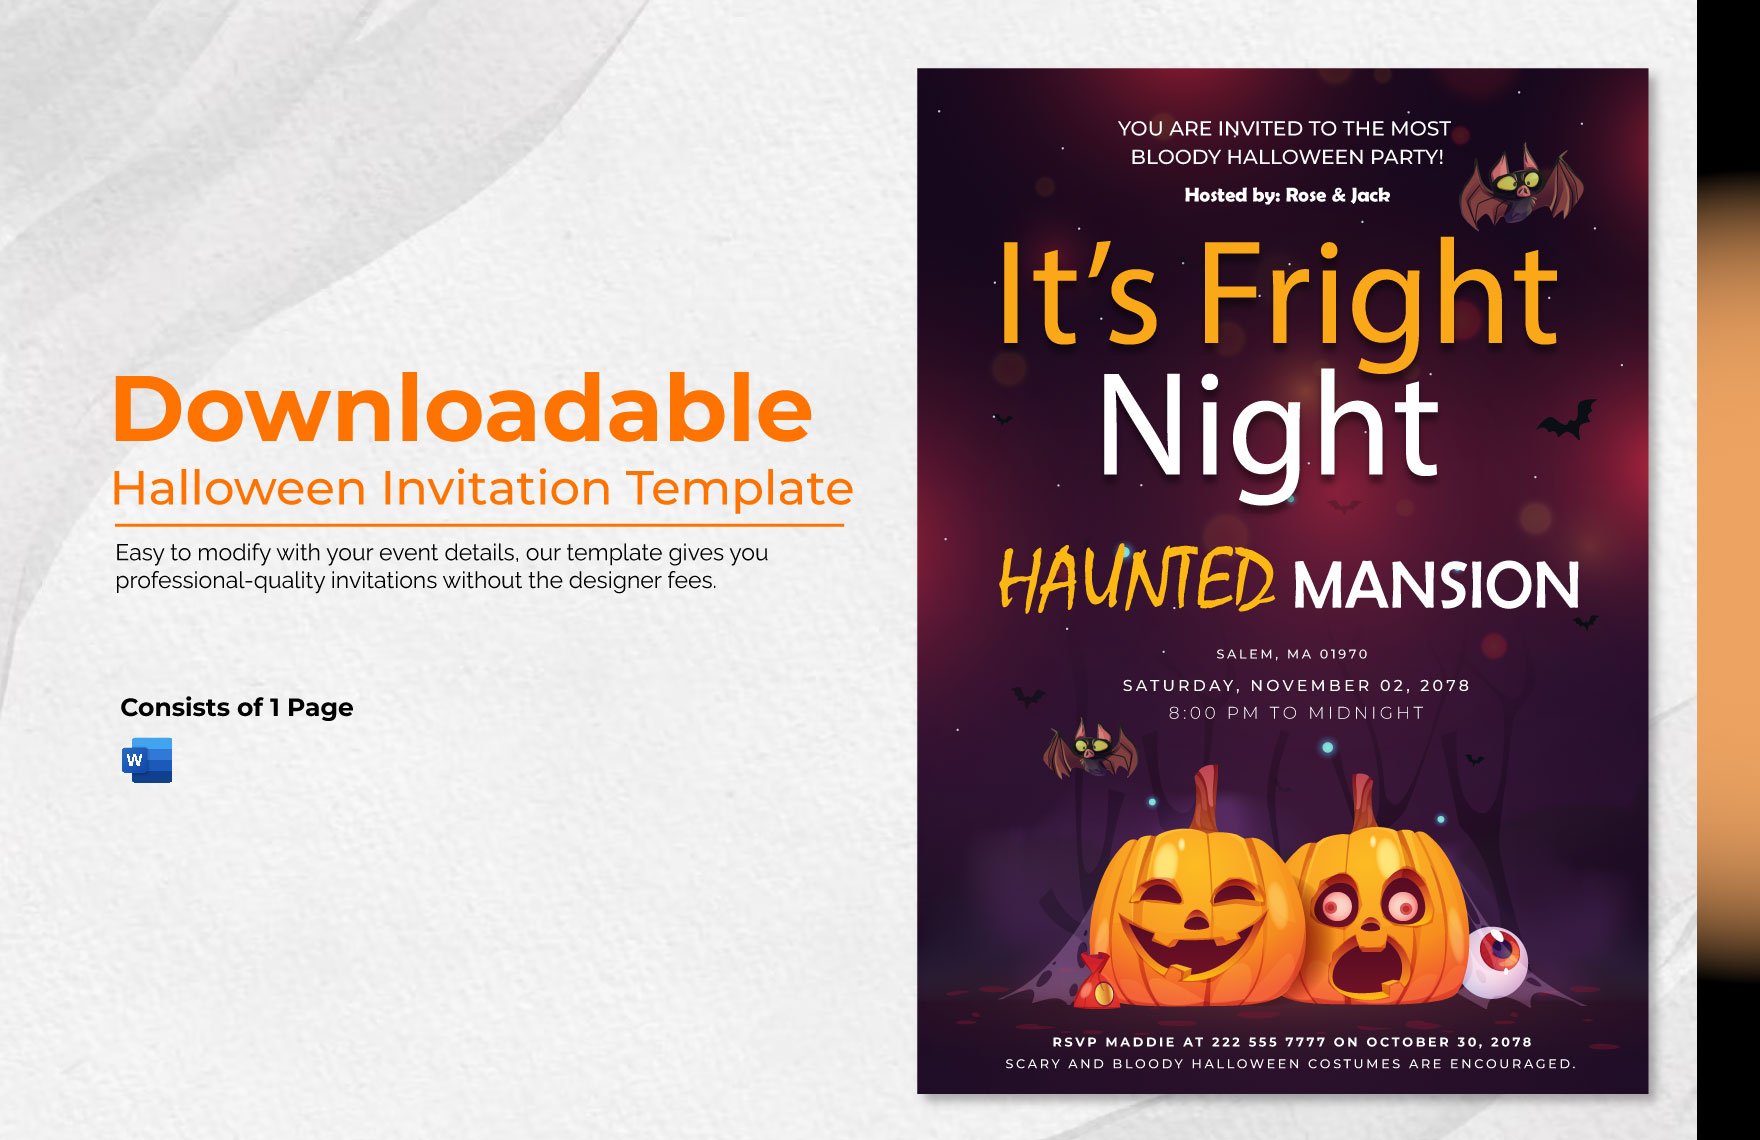 Free Downloadable Halloween Invitation Template in Word, Google Docs, PDF